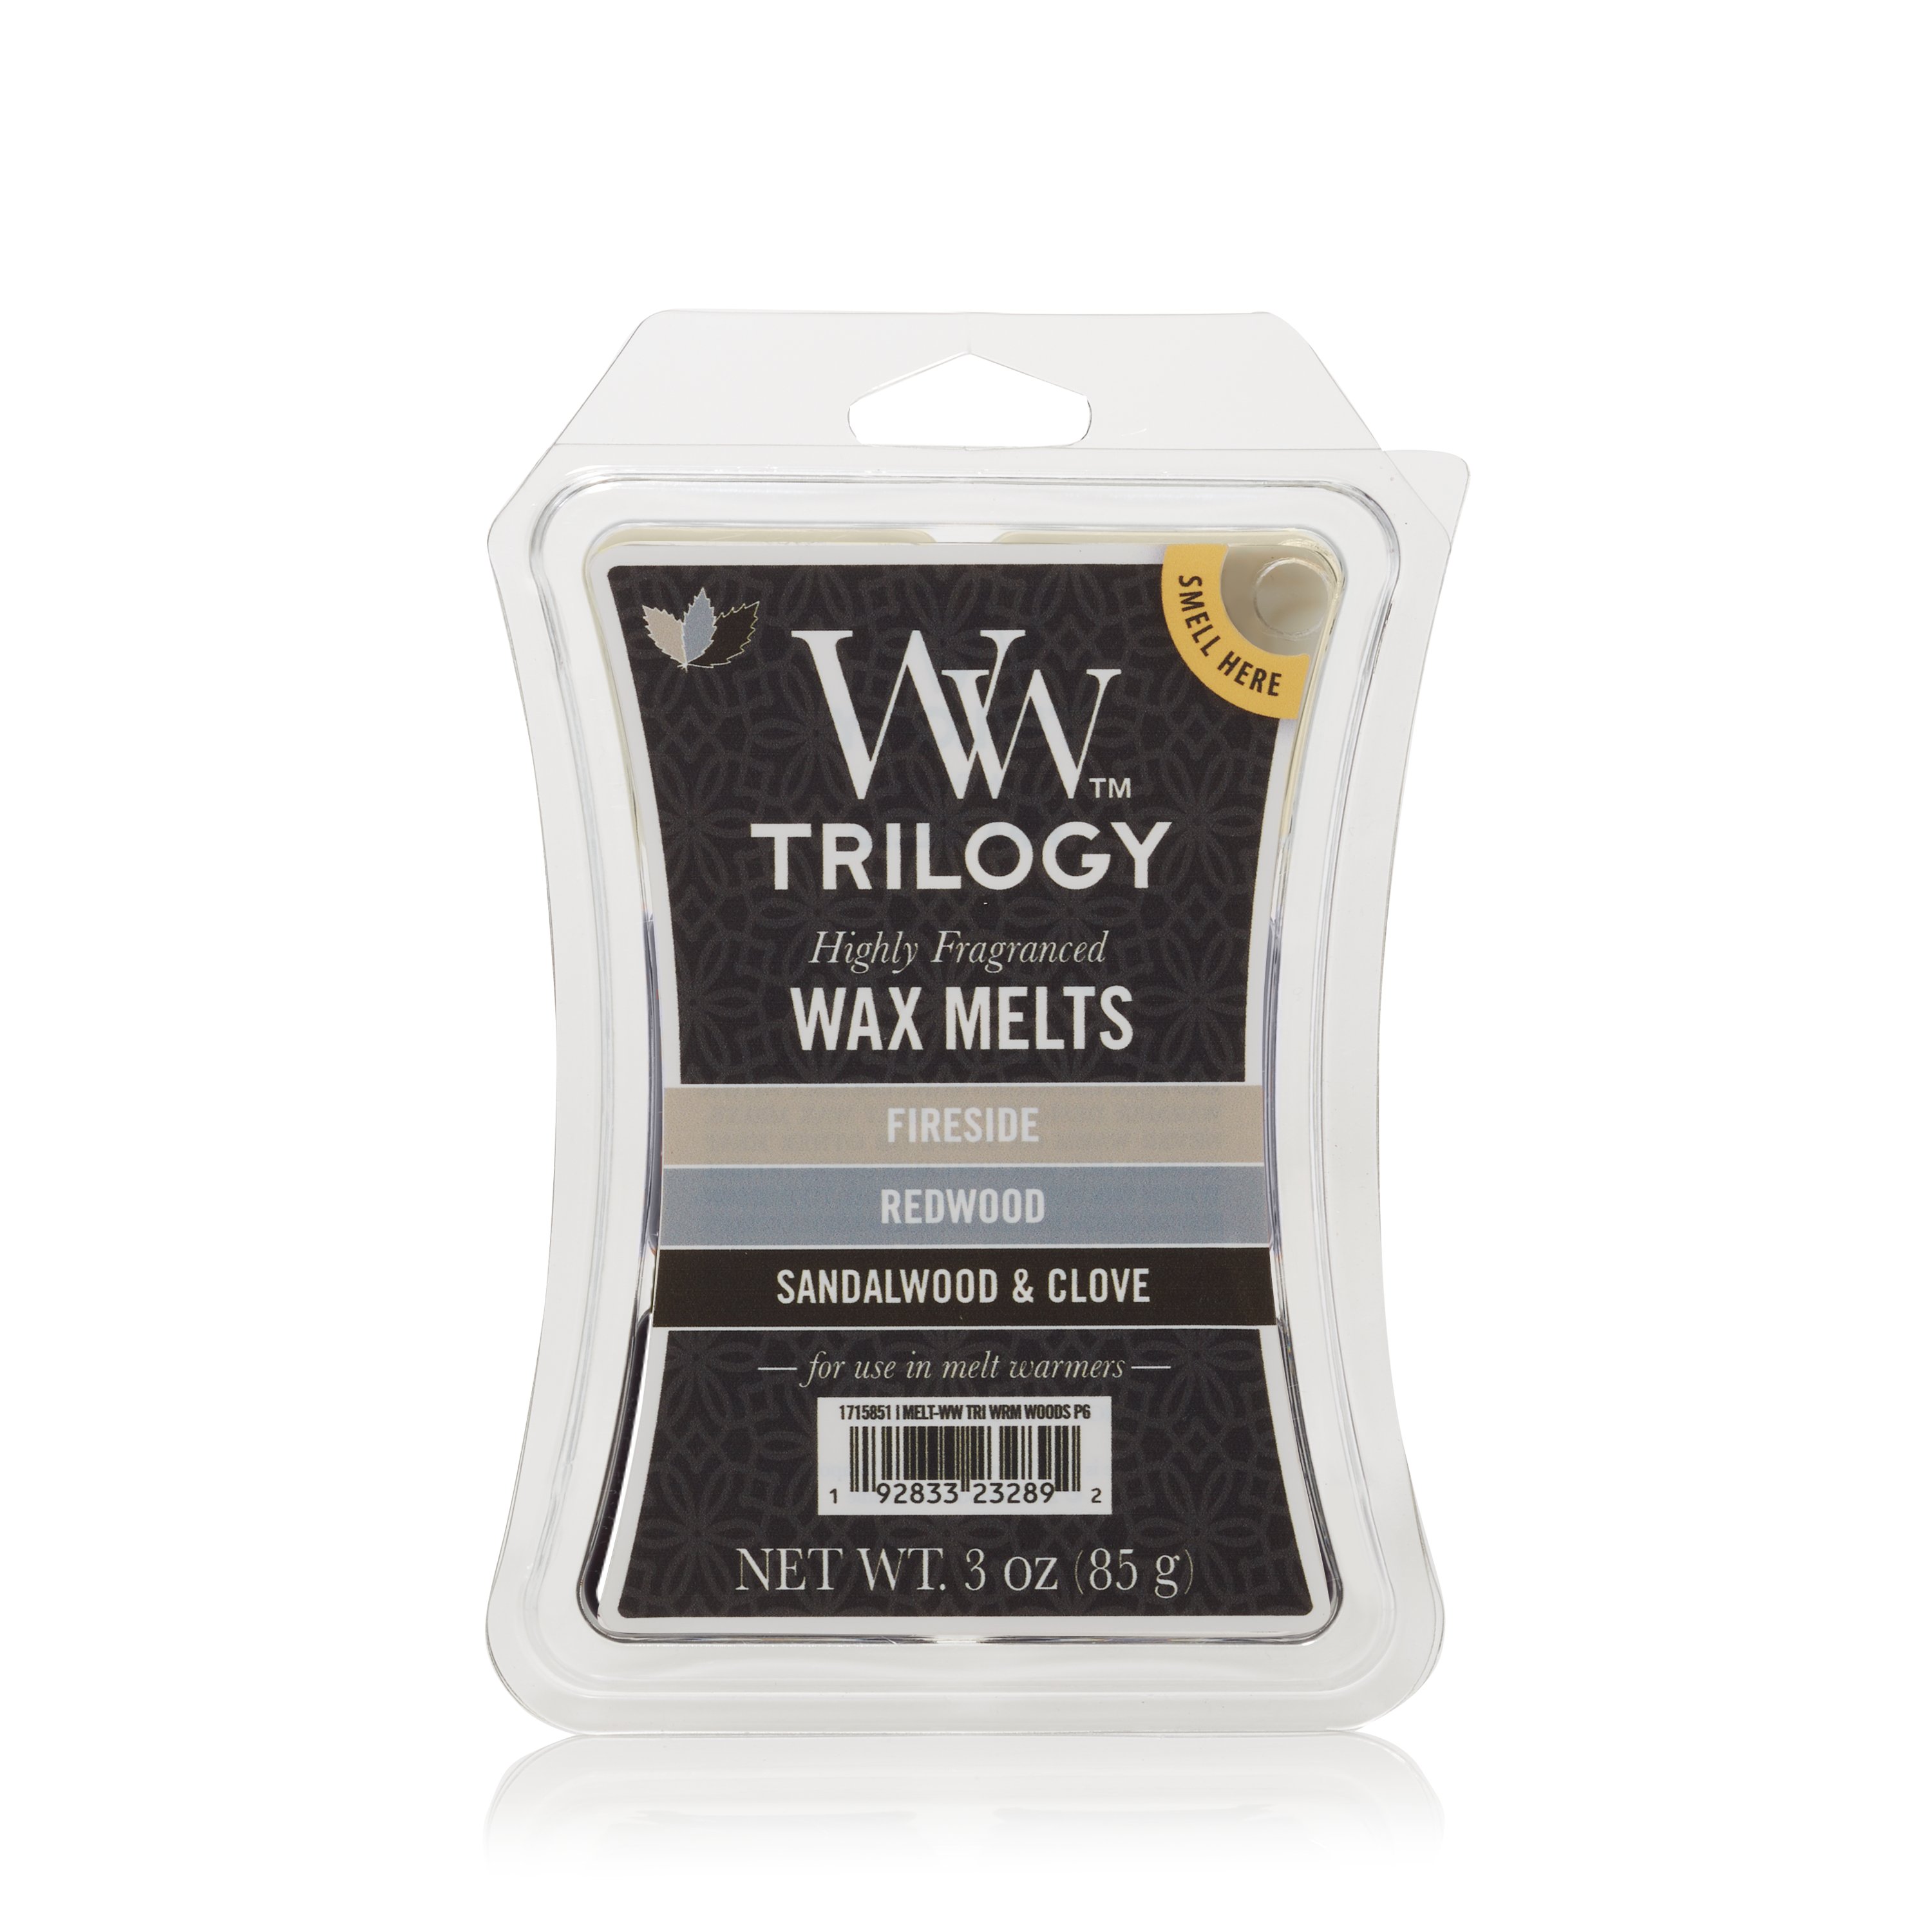 WoodWick Warm Woods Medium Trilogy Candle